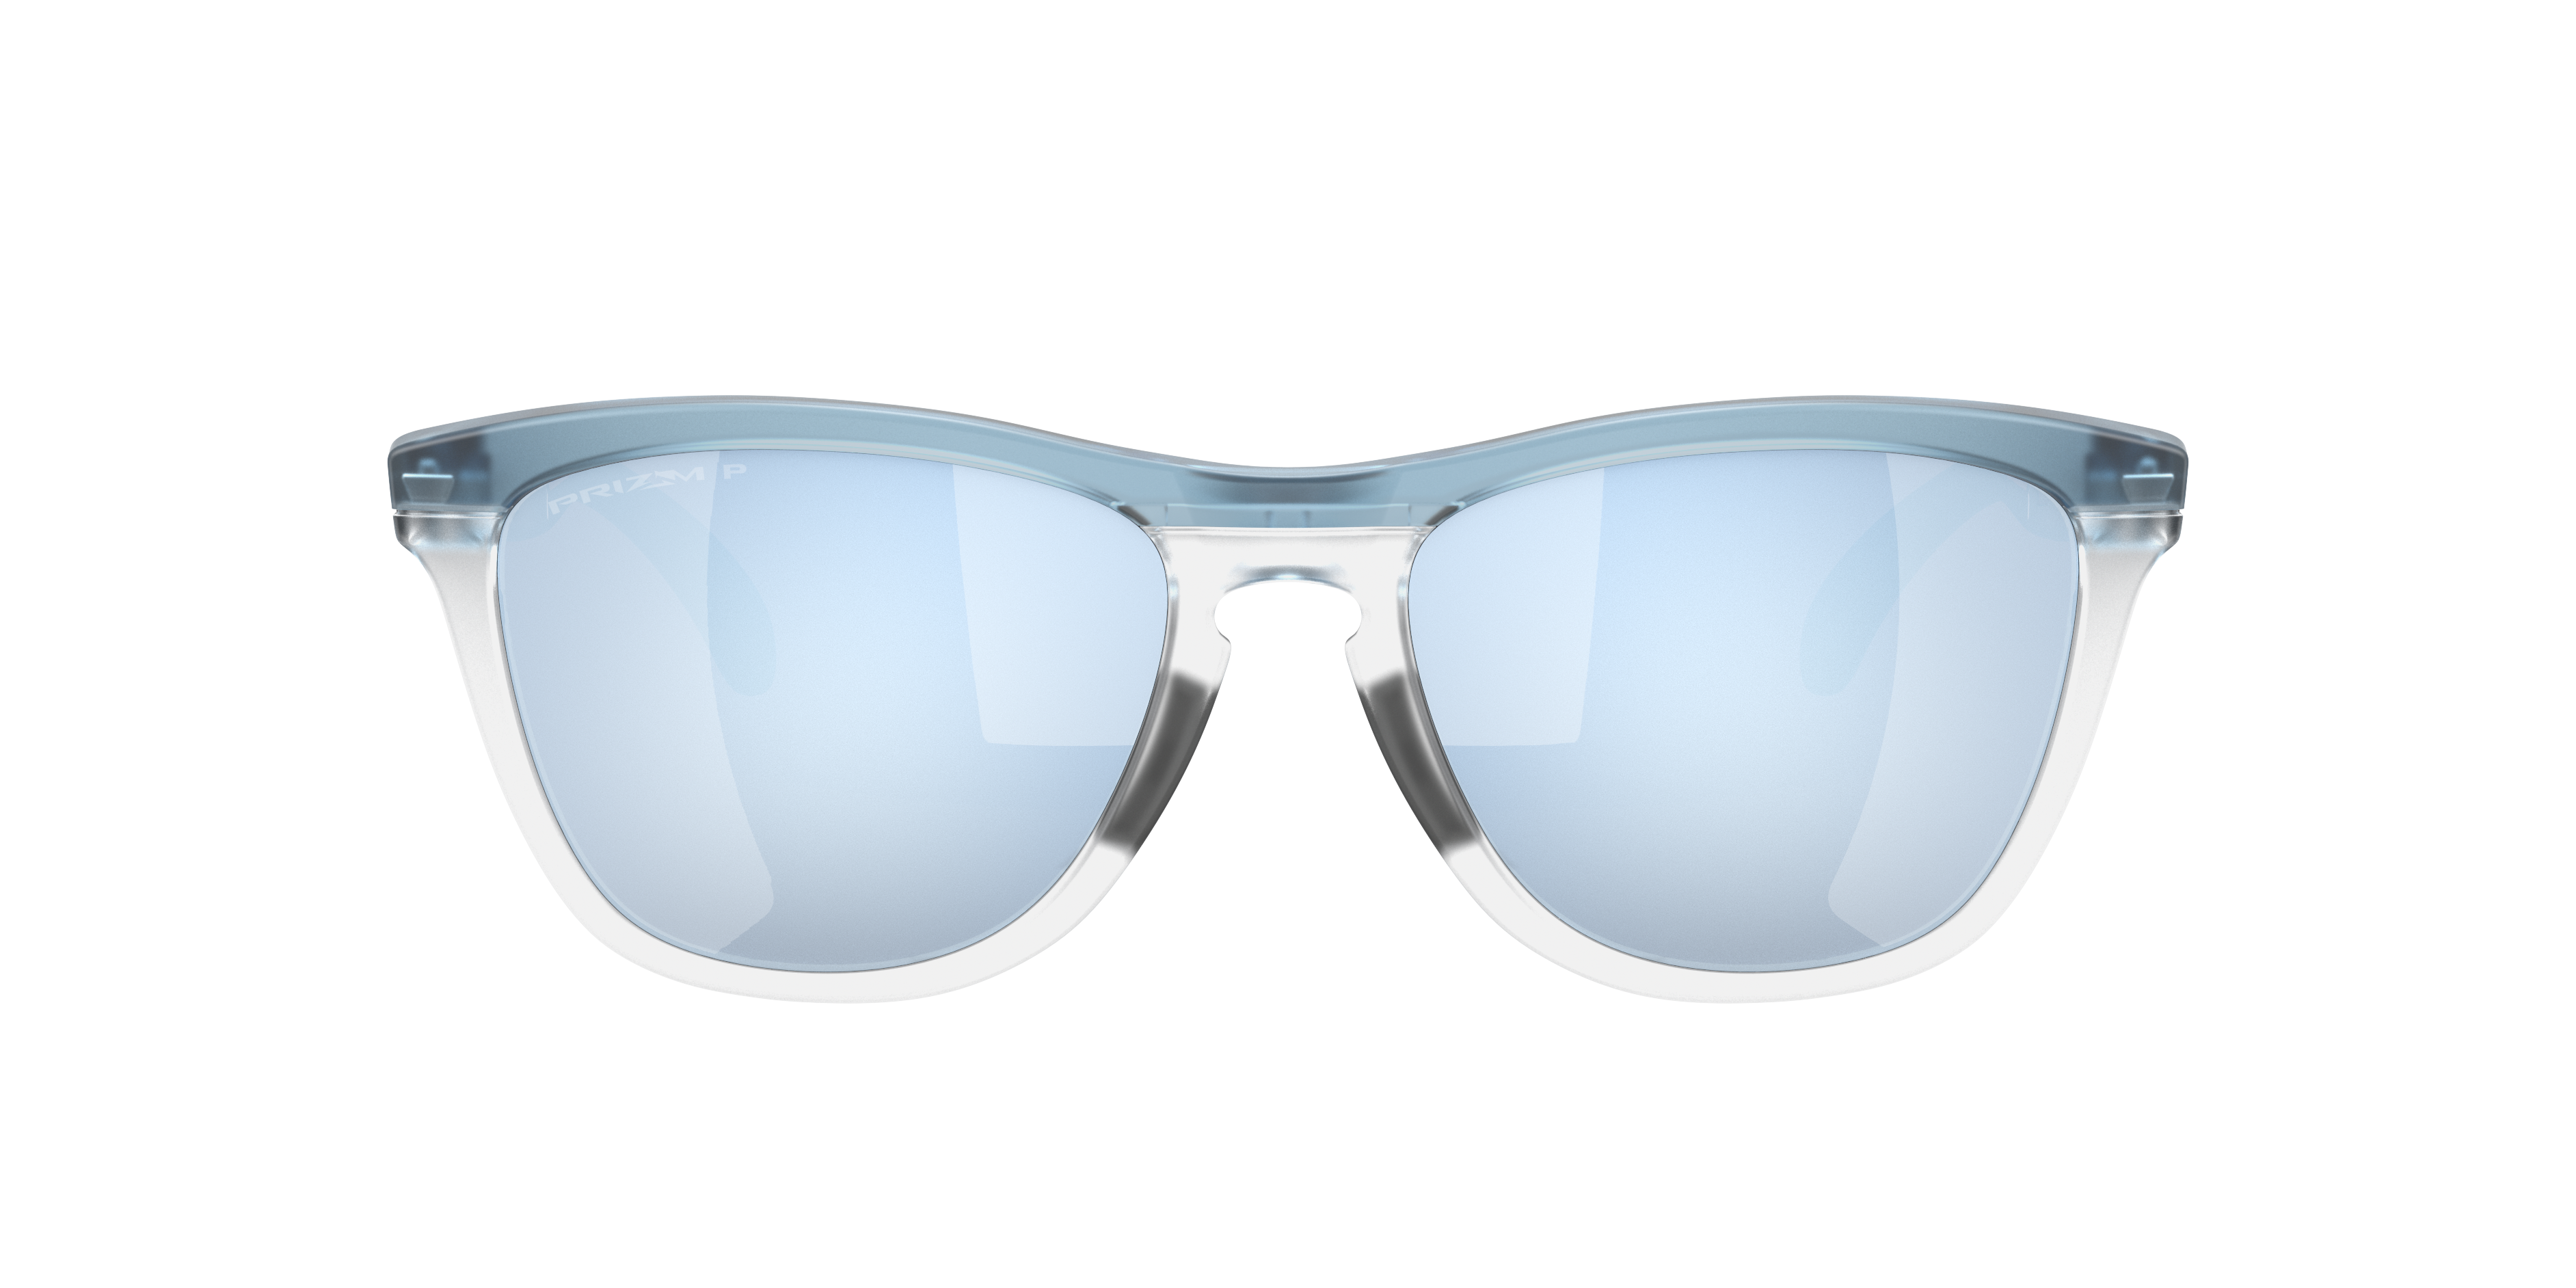 Frogskins prizm polarized sunglasses - Oakley - Men